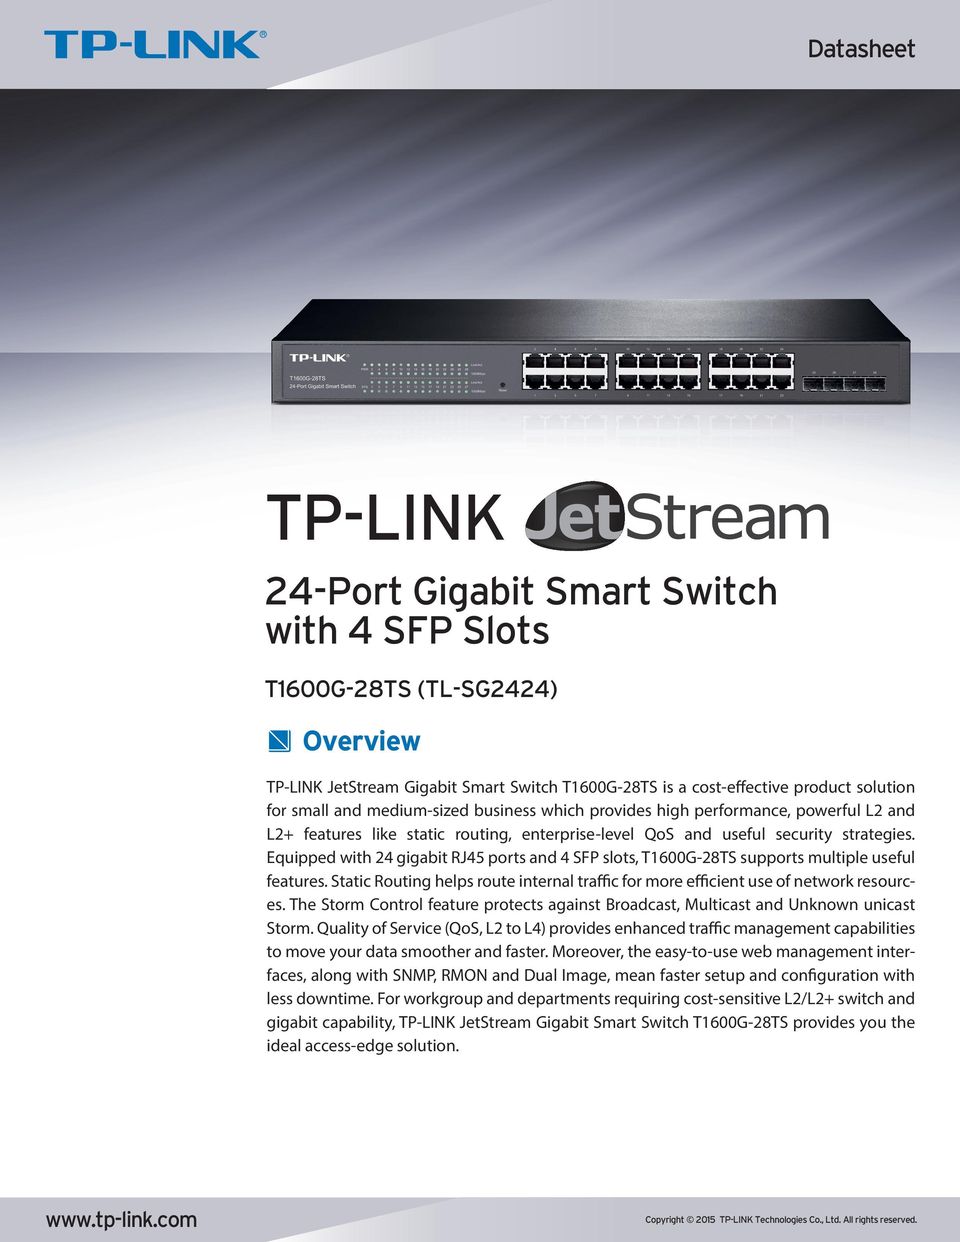 TP-LINK TL-SG2424 24-Port Gigabit Smart Managed Switch with 4 Combo SFP Slots